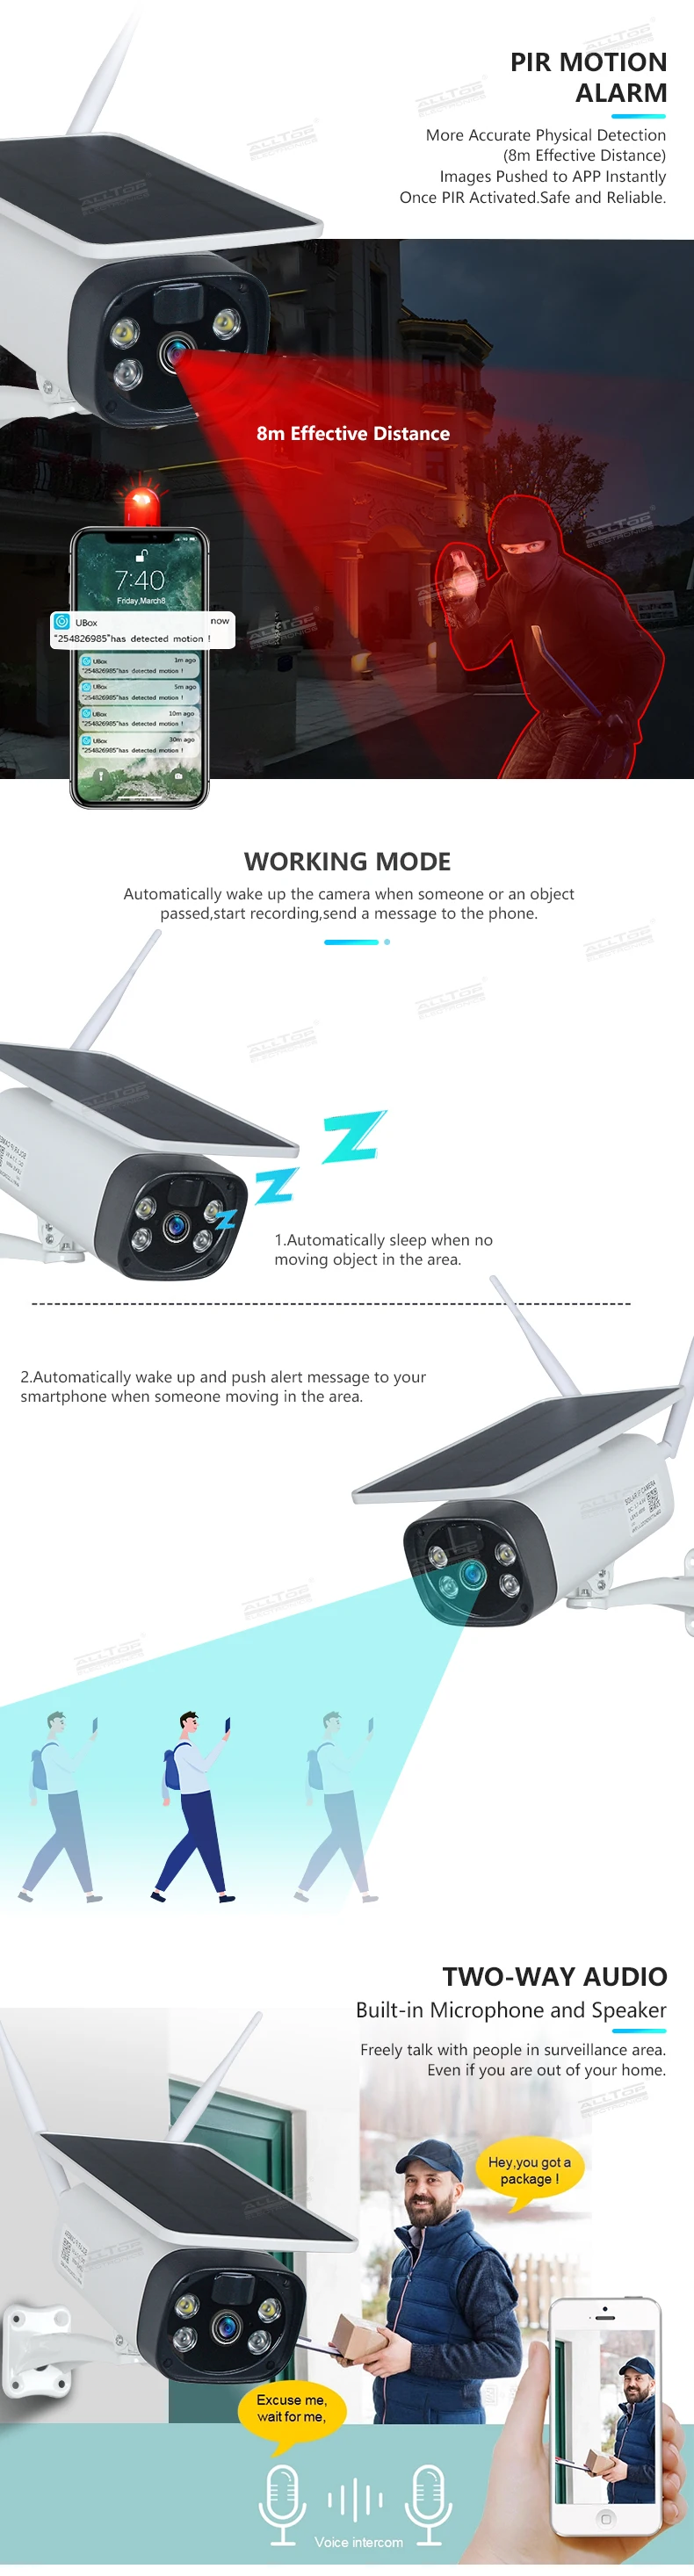 ALLTOP Hot Sale Low Consumption Security HD Surveillance CCTV Battery Powered Wireless 4G Solar Power IP Camera